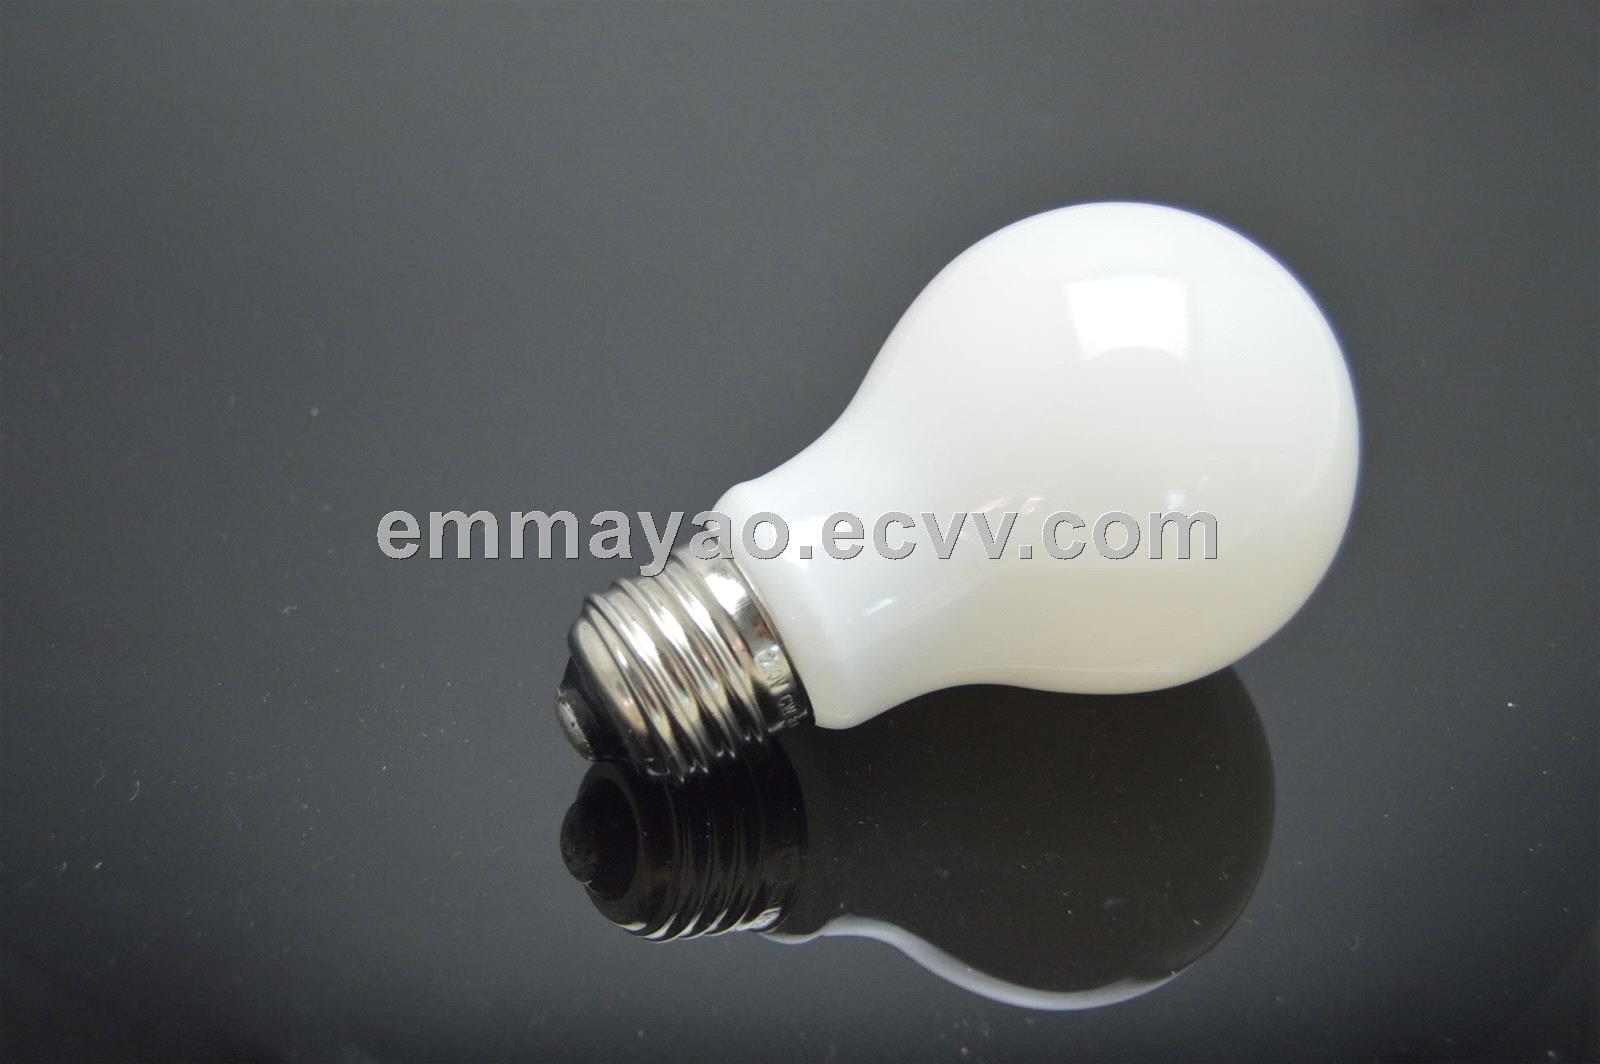 Frosty filament LED decorative bulb cool white light bulb